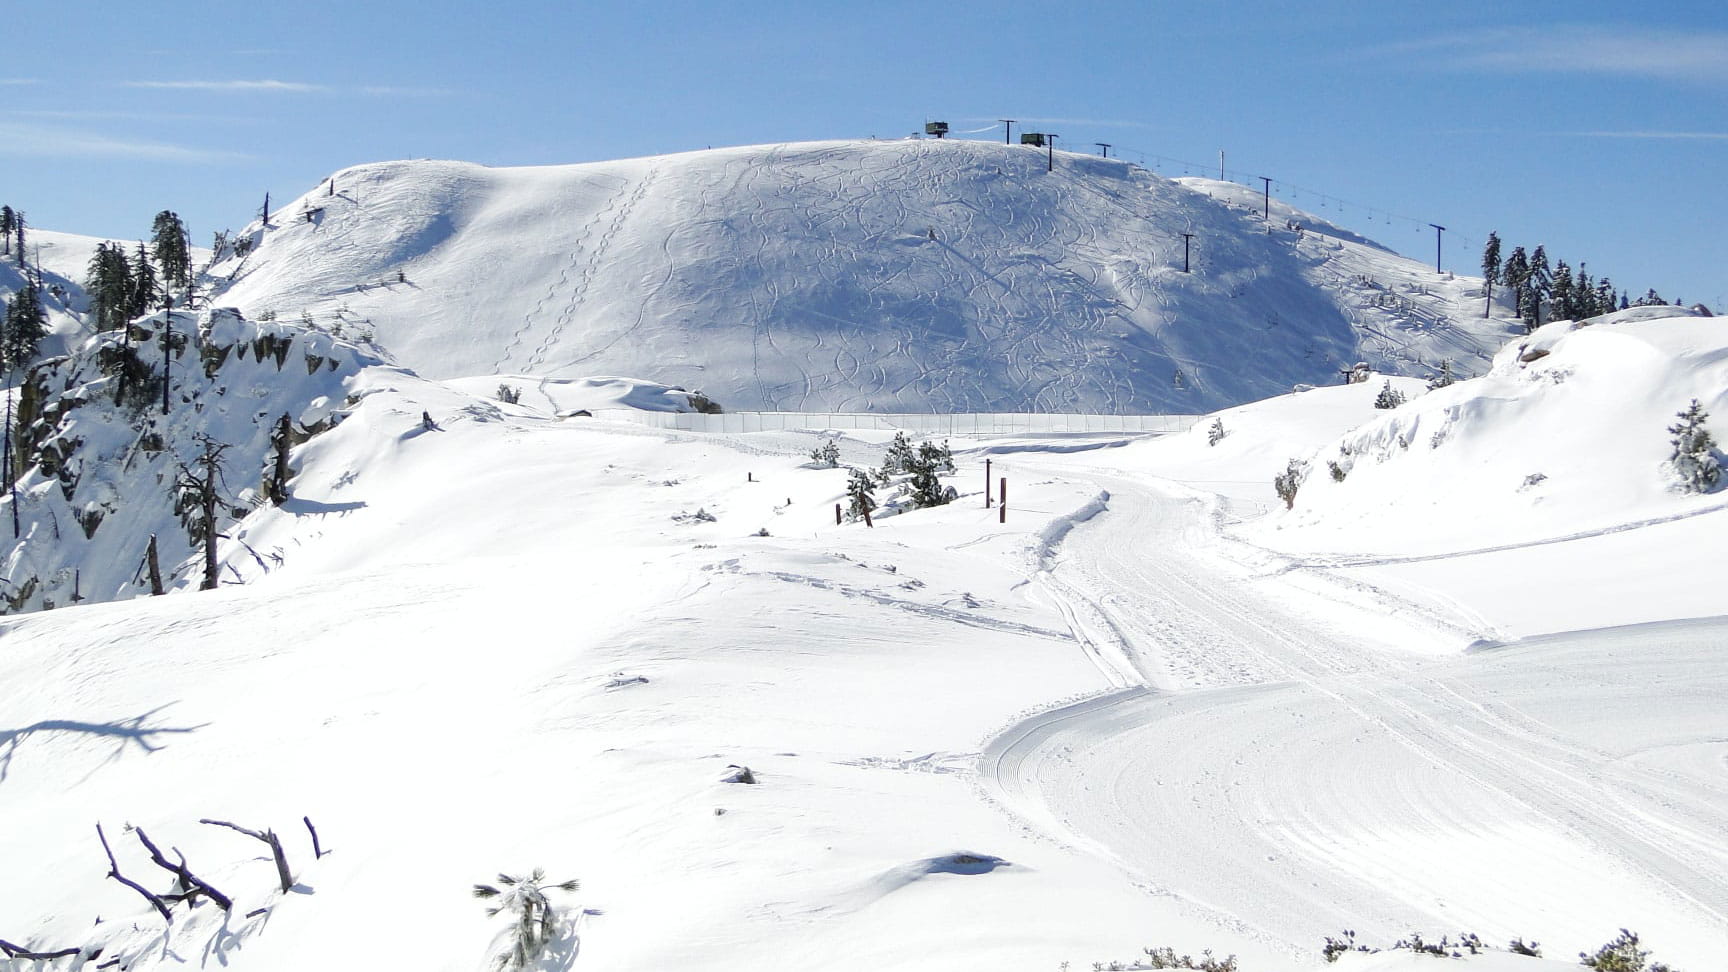 Winter ski runs at Snow Valley